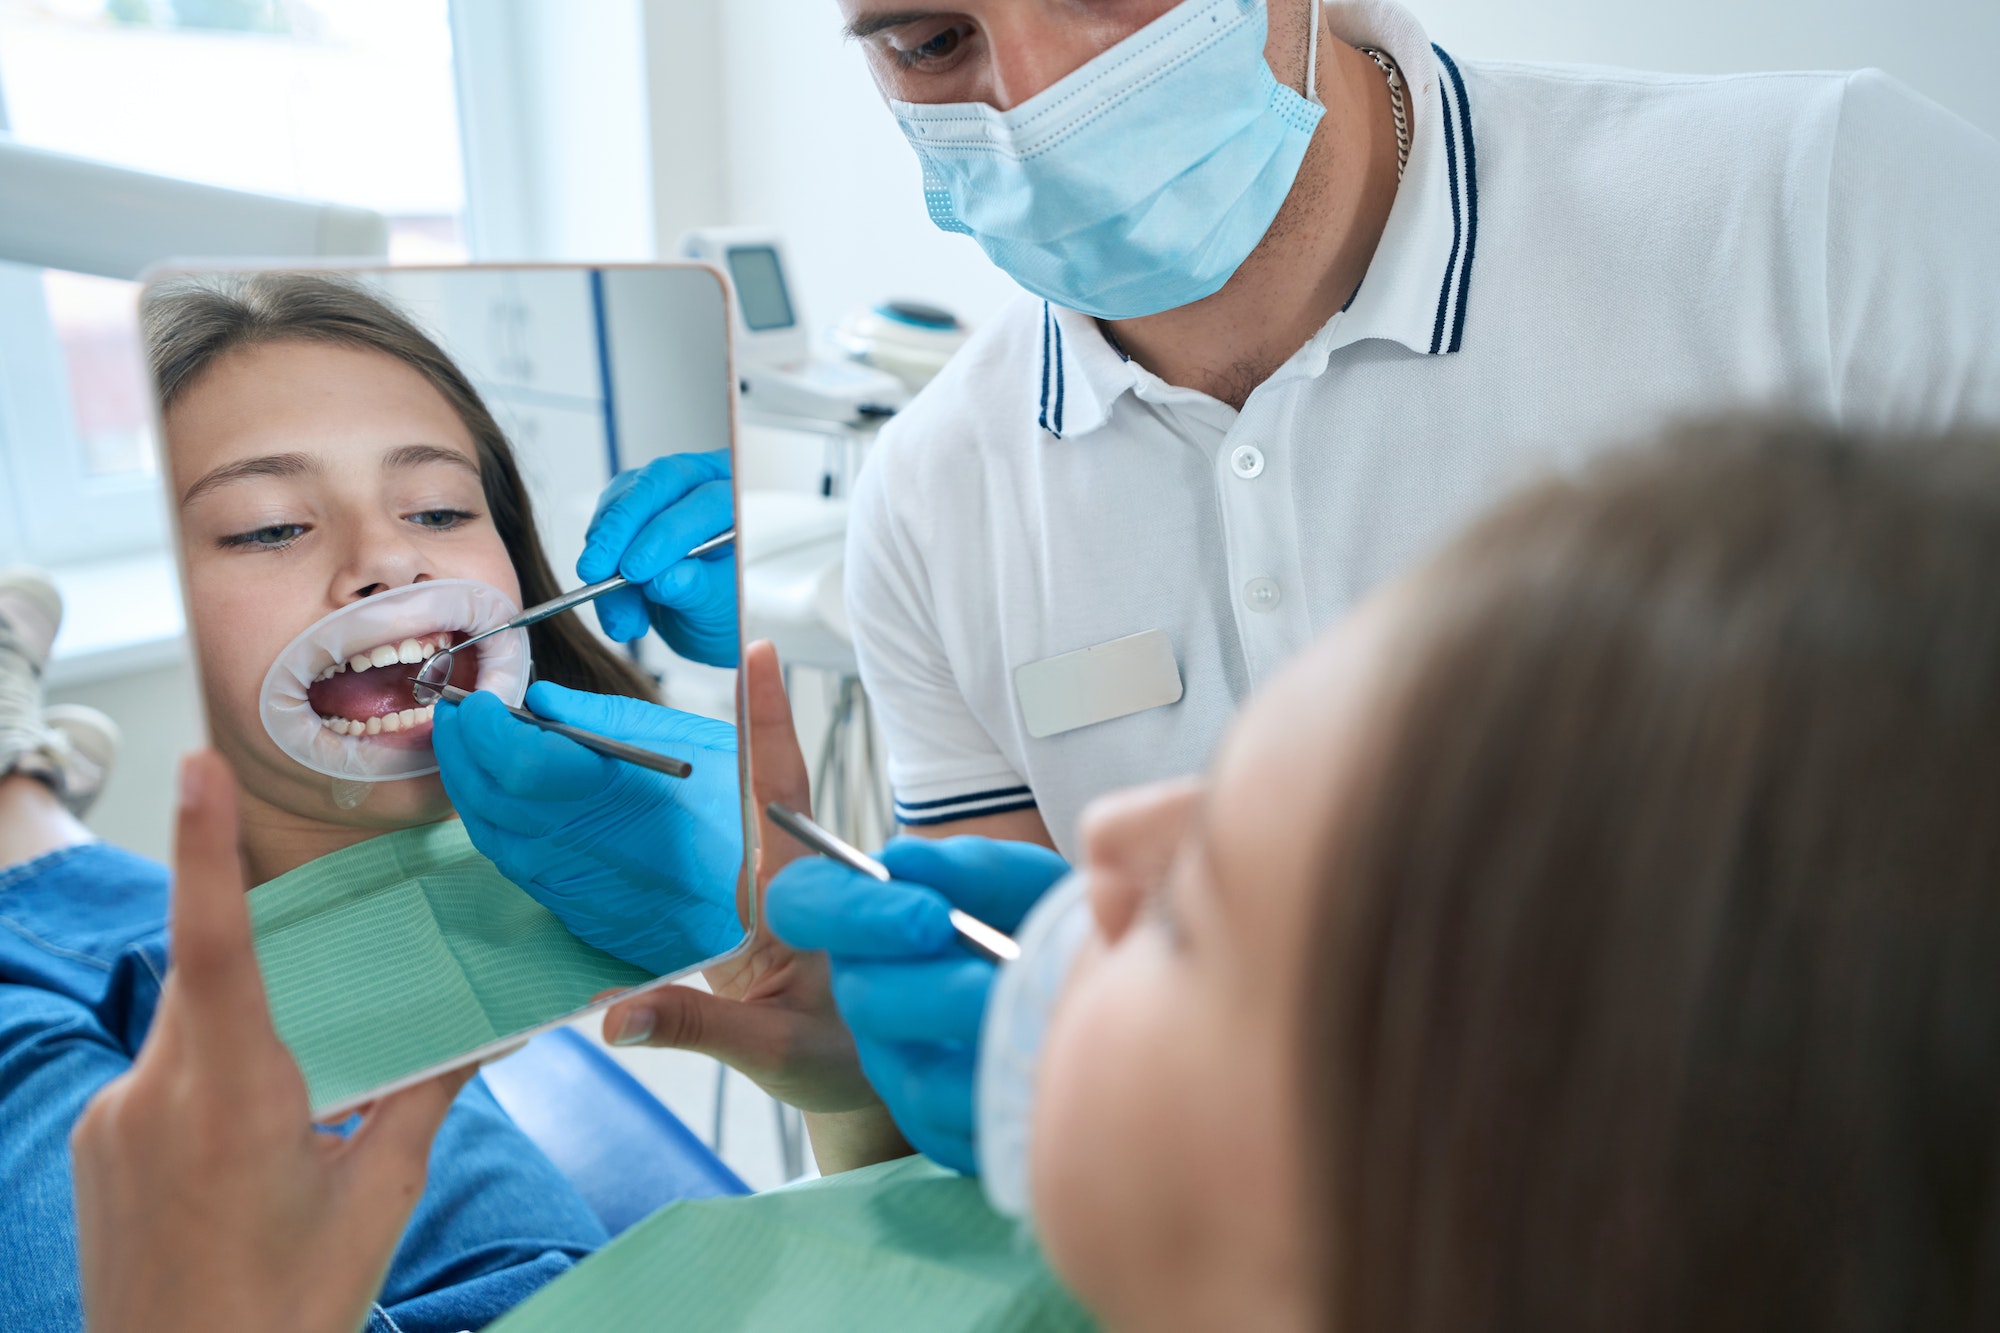 Pediatric dentist performing dental examination of teenage patient